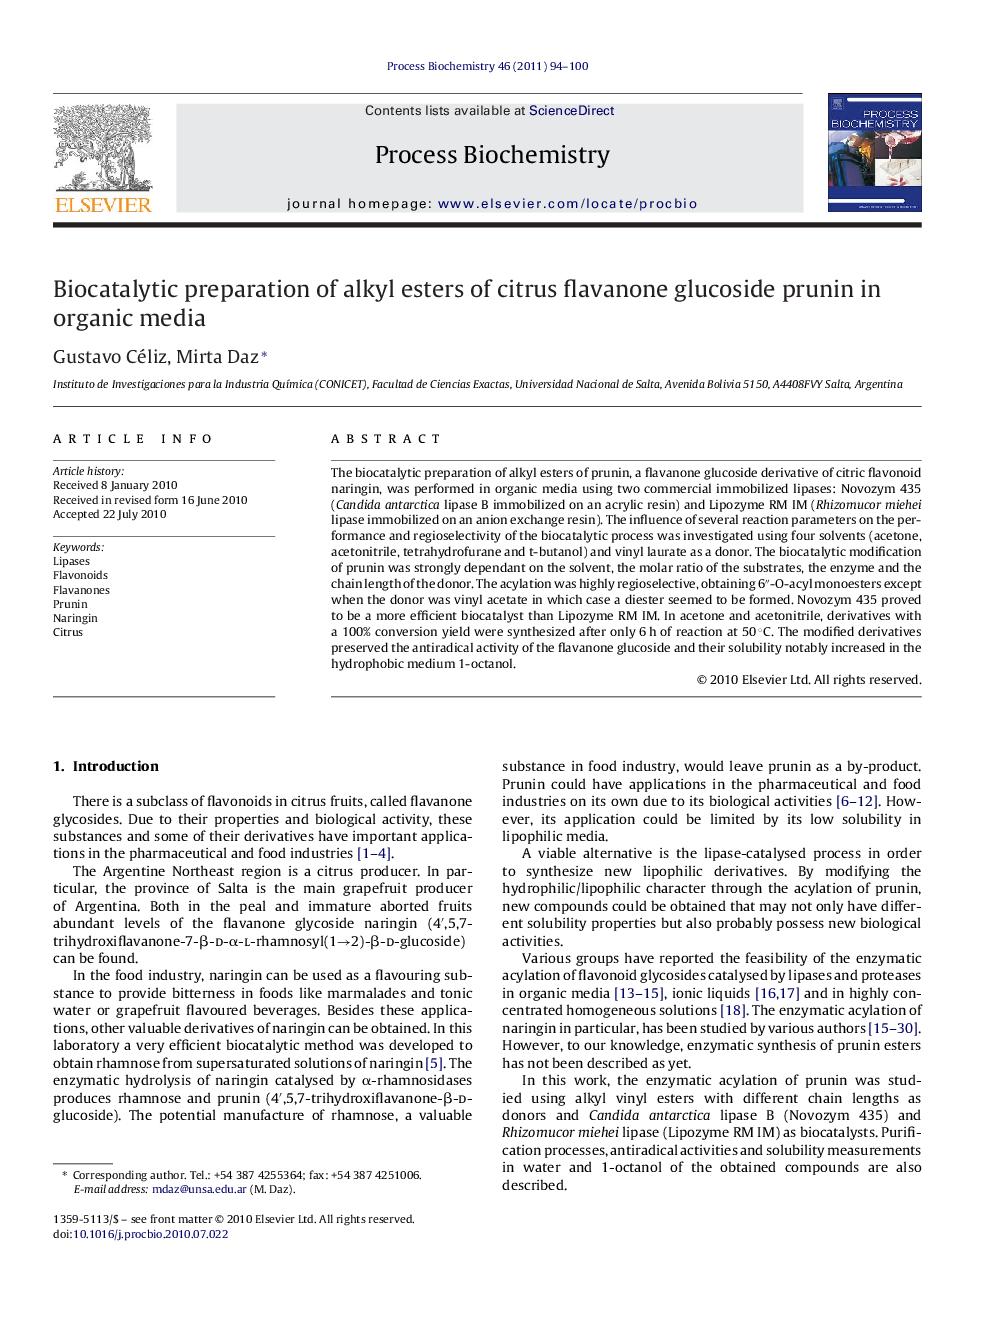 Biocatalytic preparation of alkyl esters of citrus flavanone glucoside prunin in organic media